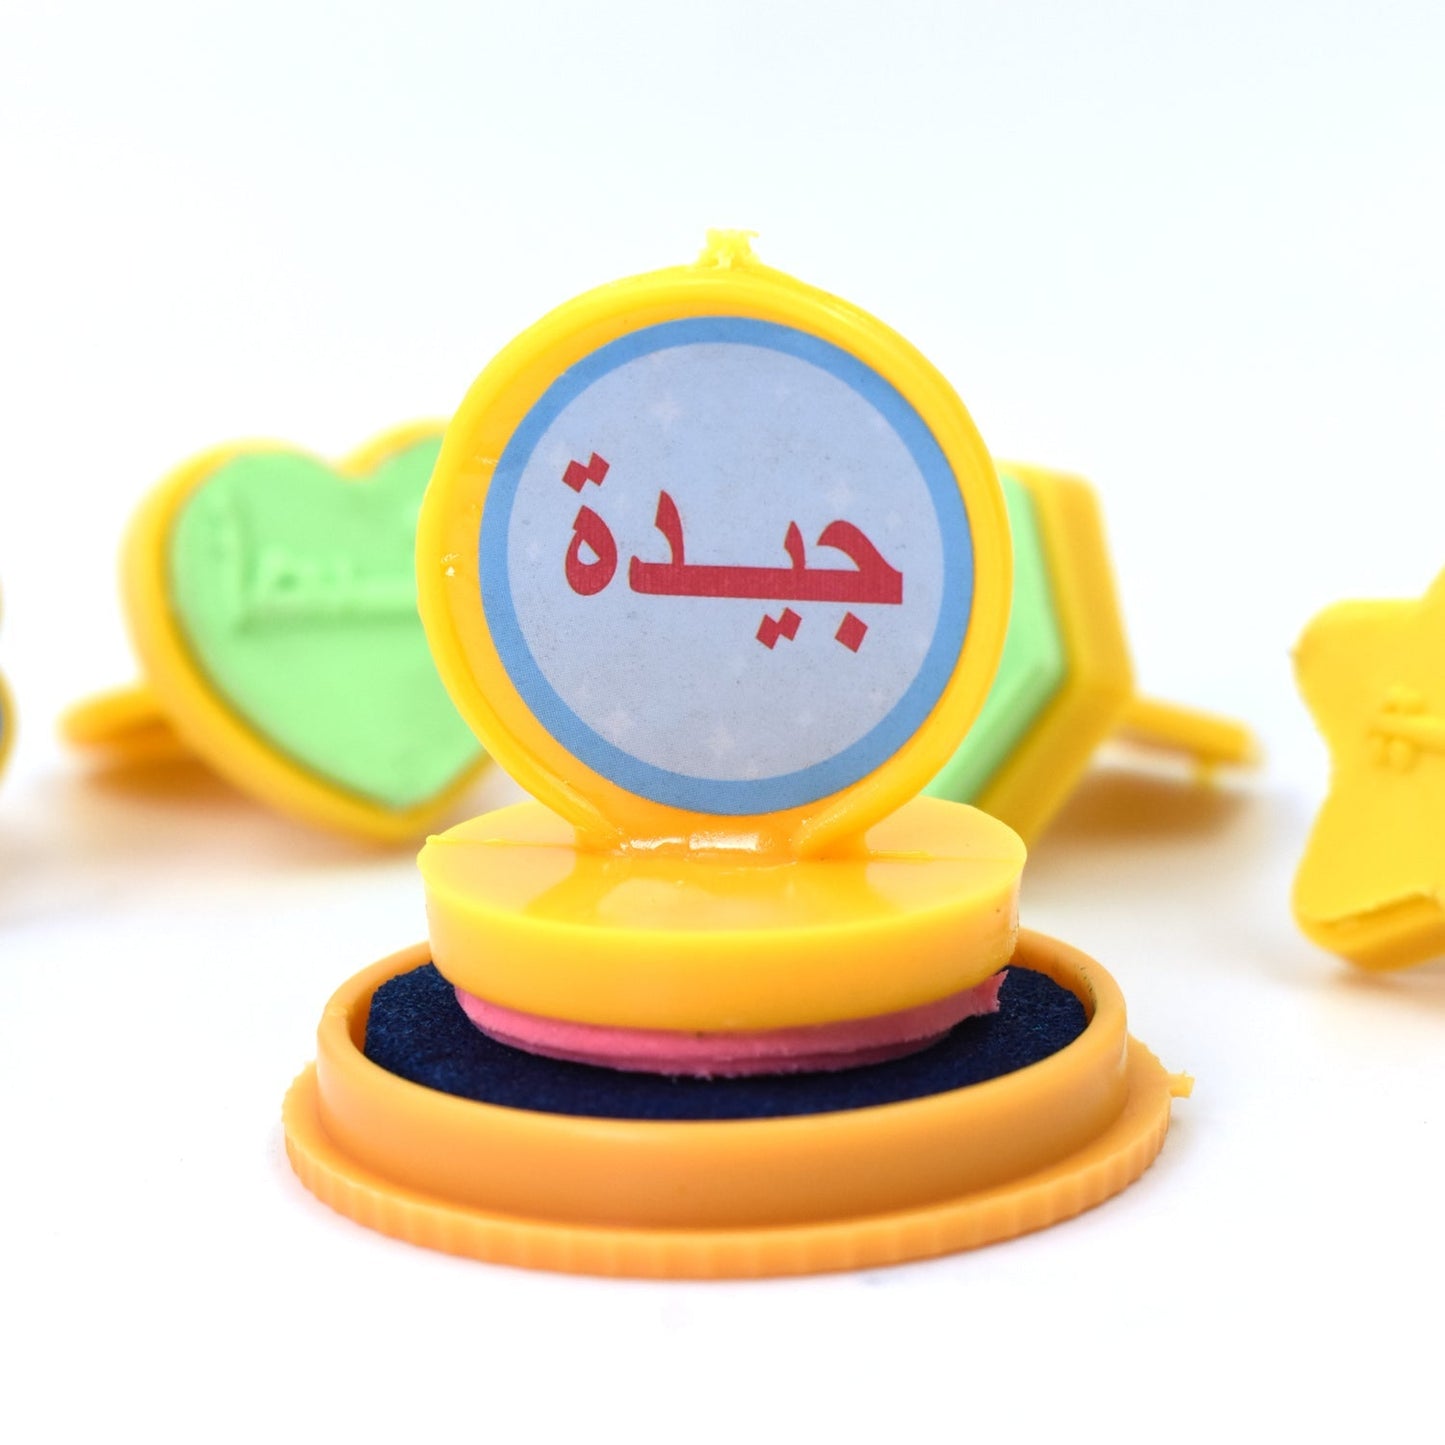 Unique Different Shape Stamps 7 pieces for Kids Motivation and Reward Theme Prefect Gift for Teachers, Parents and Students (Multicolor)